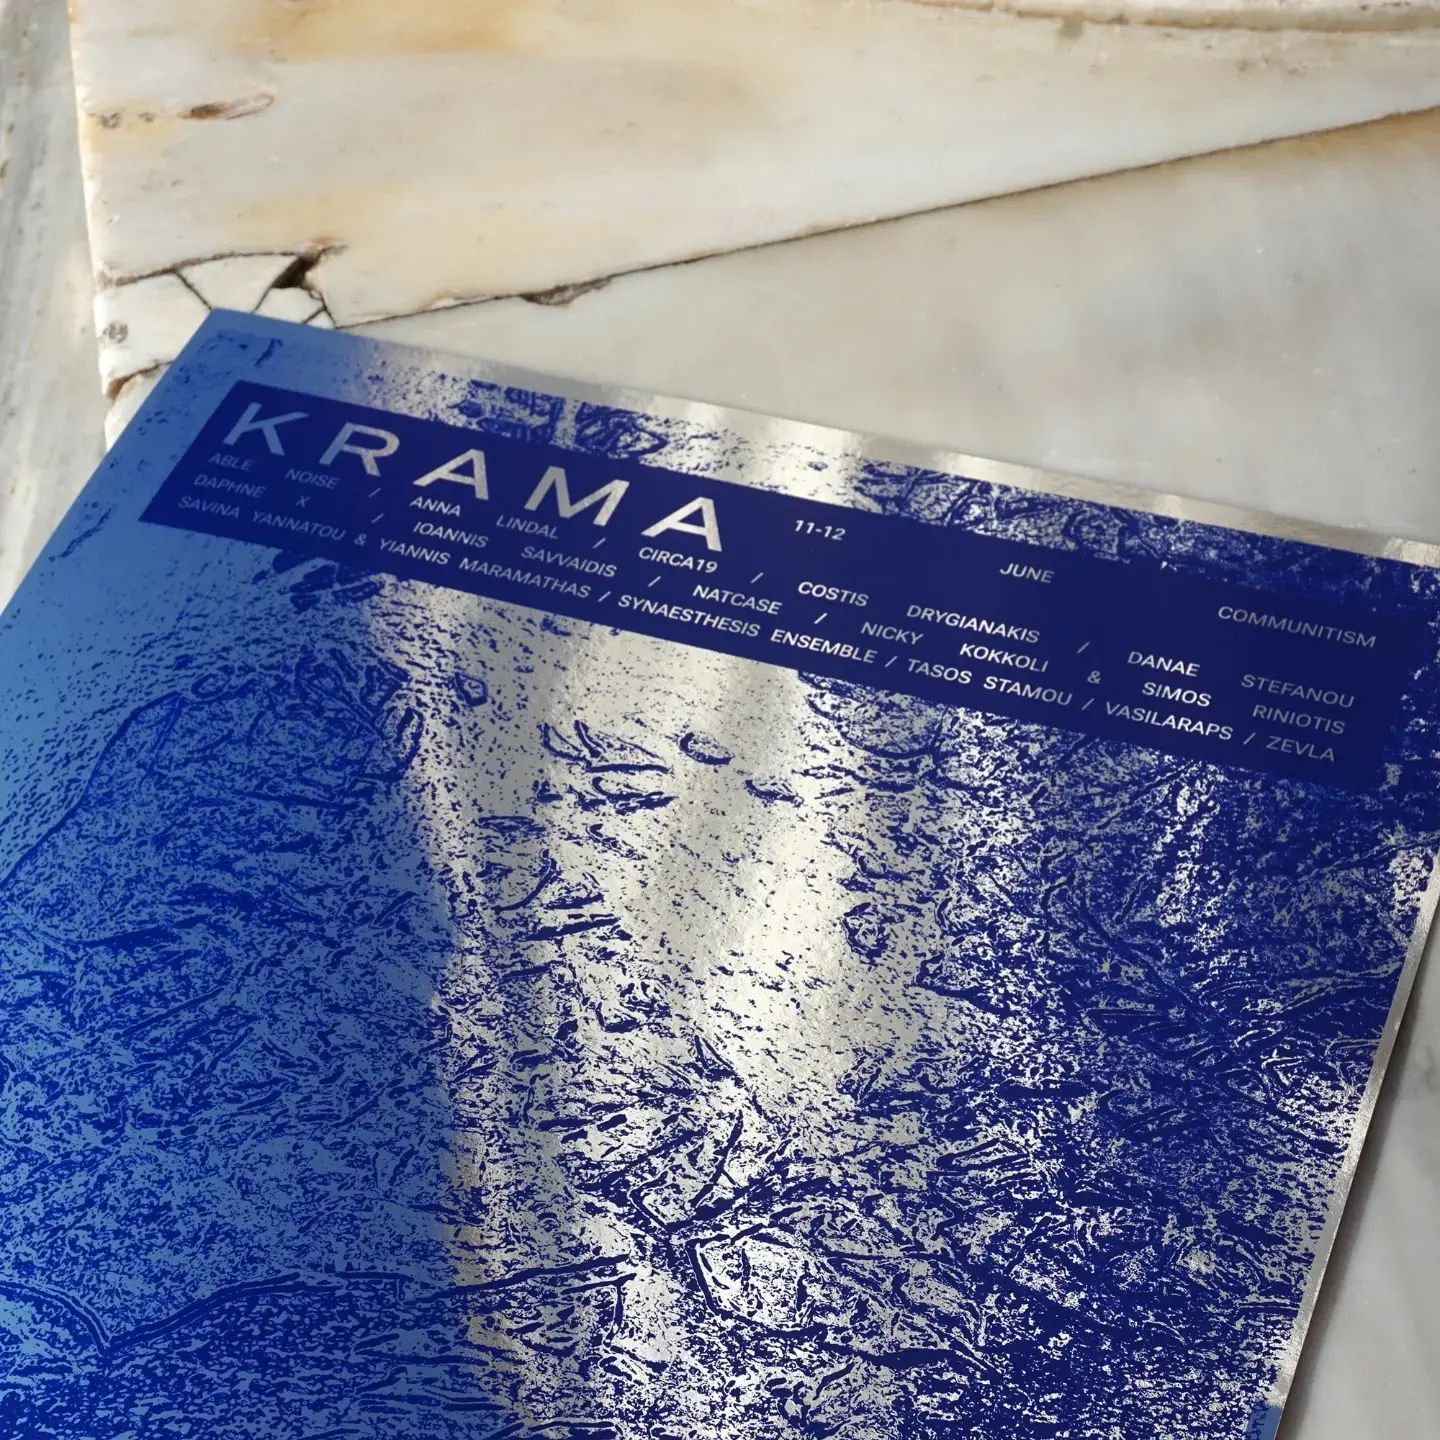 Krama Festival 2022, design by Markela Bgiala